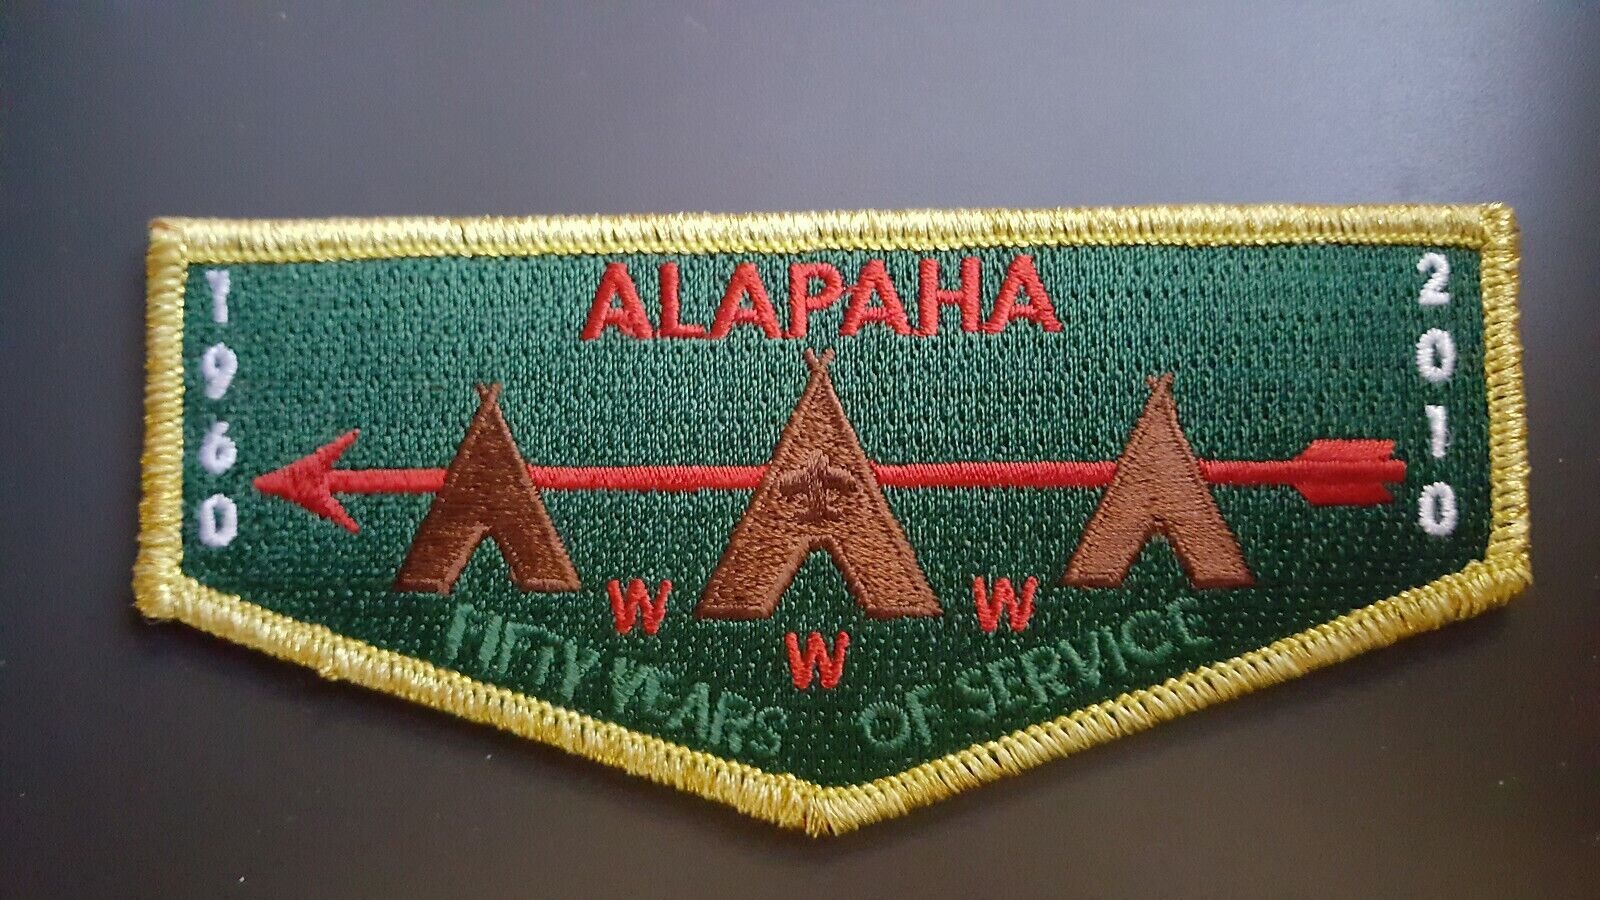 OA, Alapaha (545) 50th Anniversary Flap (S-42), Merged 2013